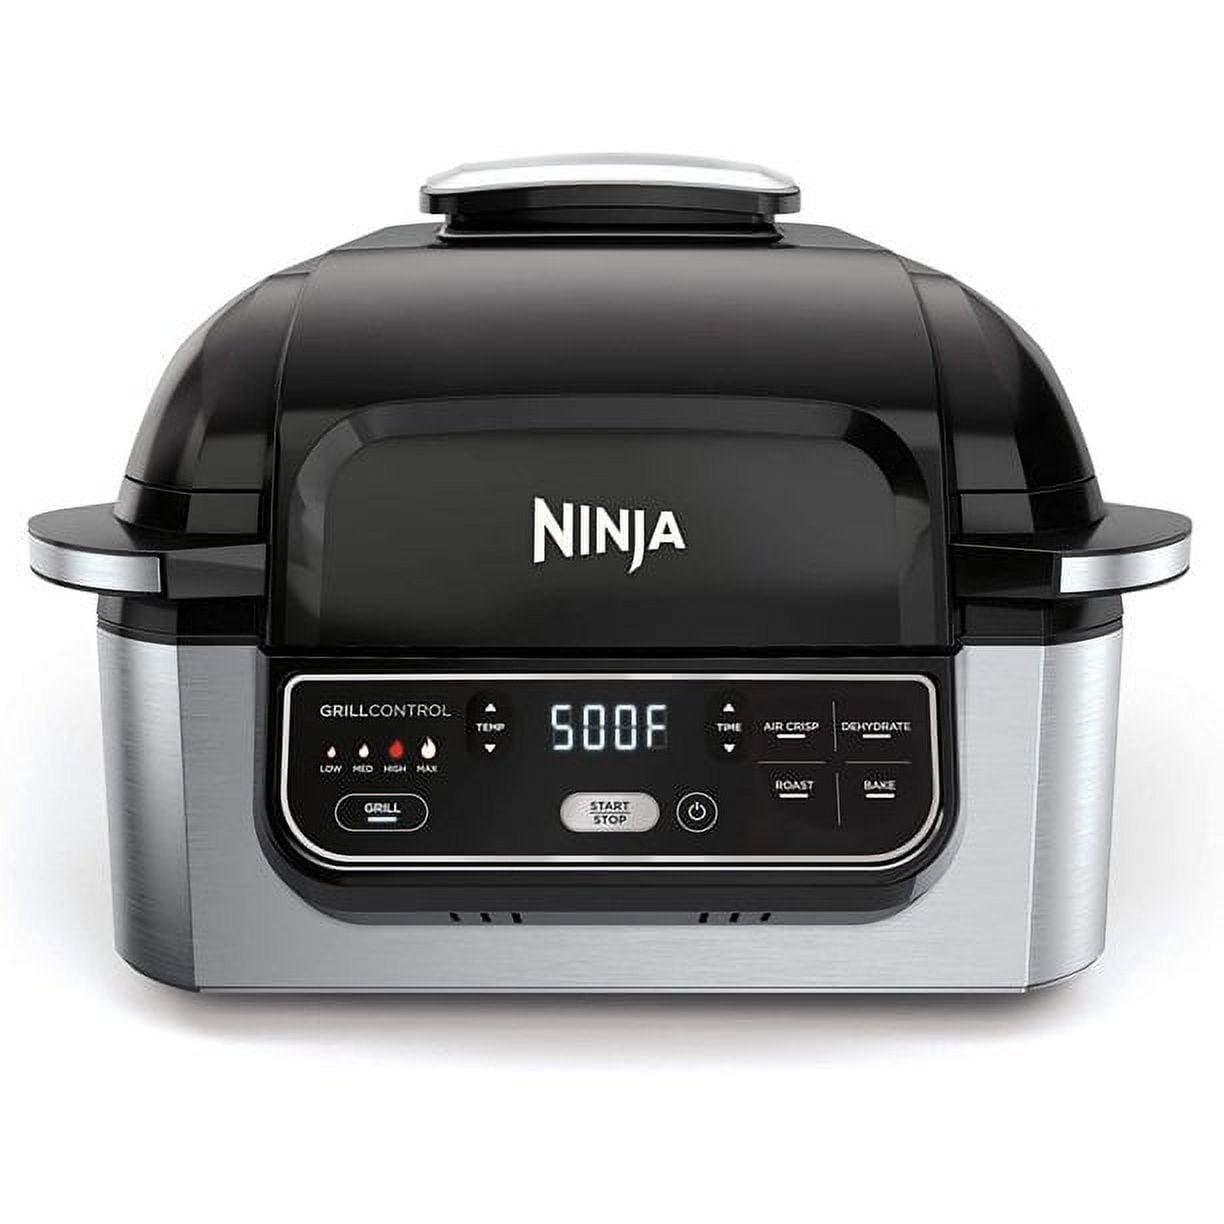 Win a £200 Ninja Foodi Health Grill & Air Fryer courtesy of Ninja Kitchen